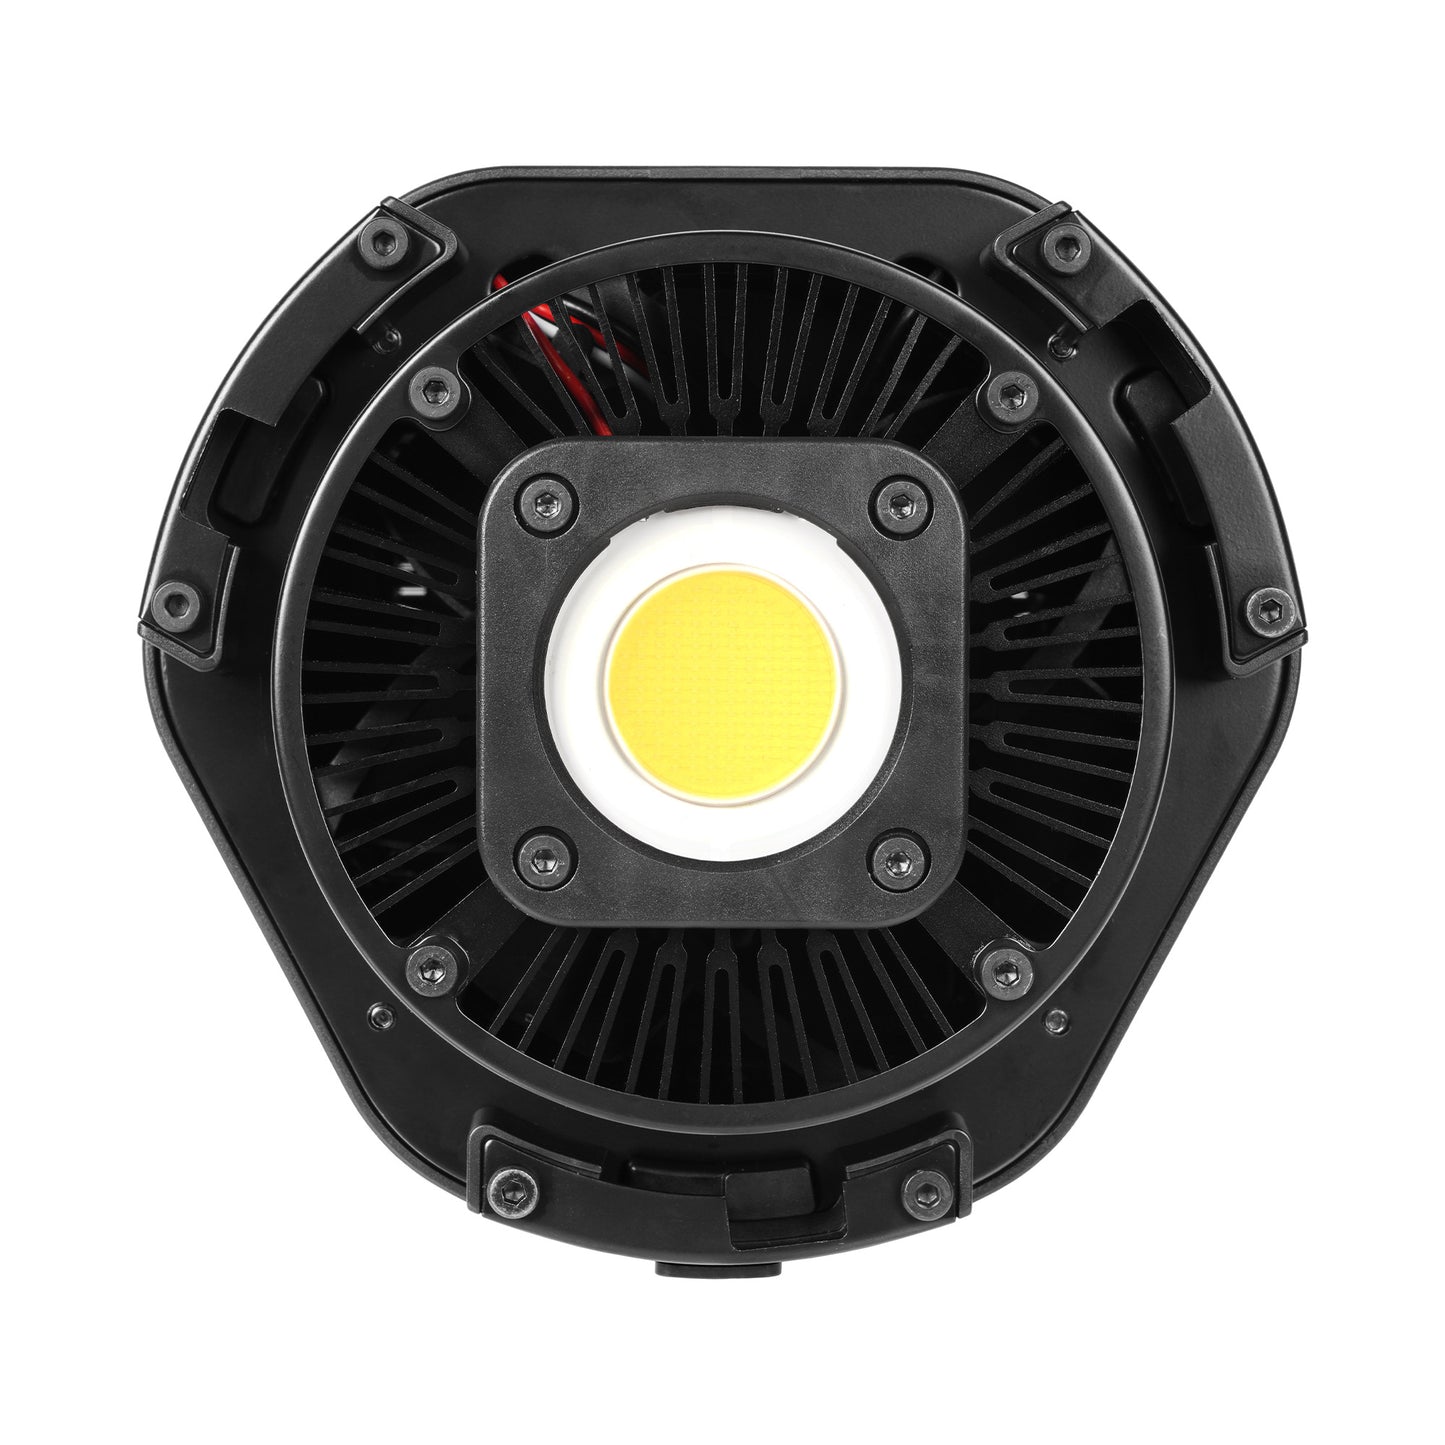 SIRUI C60 LED continuous light 60W - super quiet 20dB - photo + video light